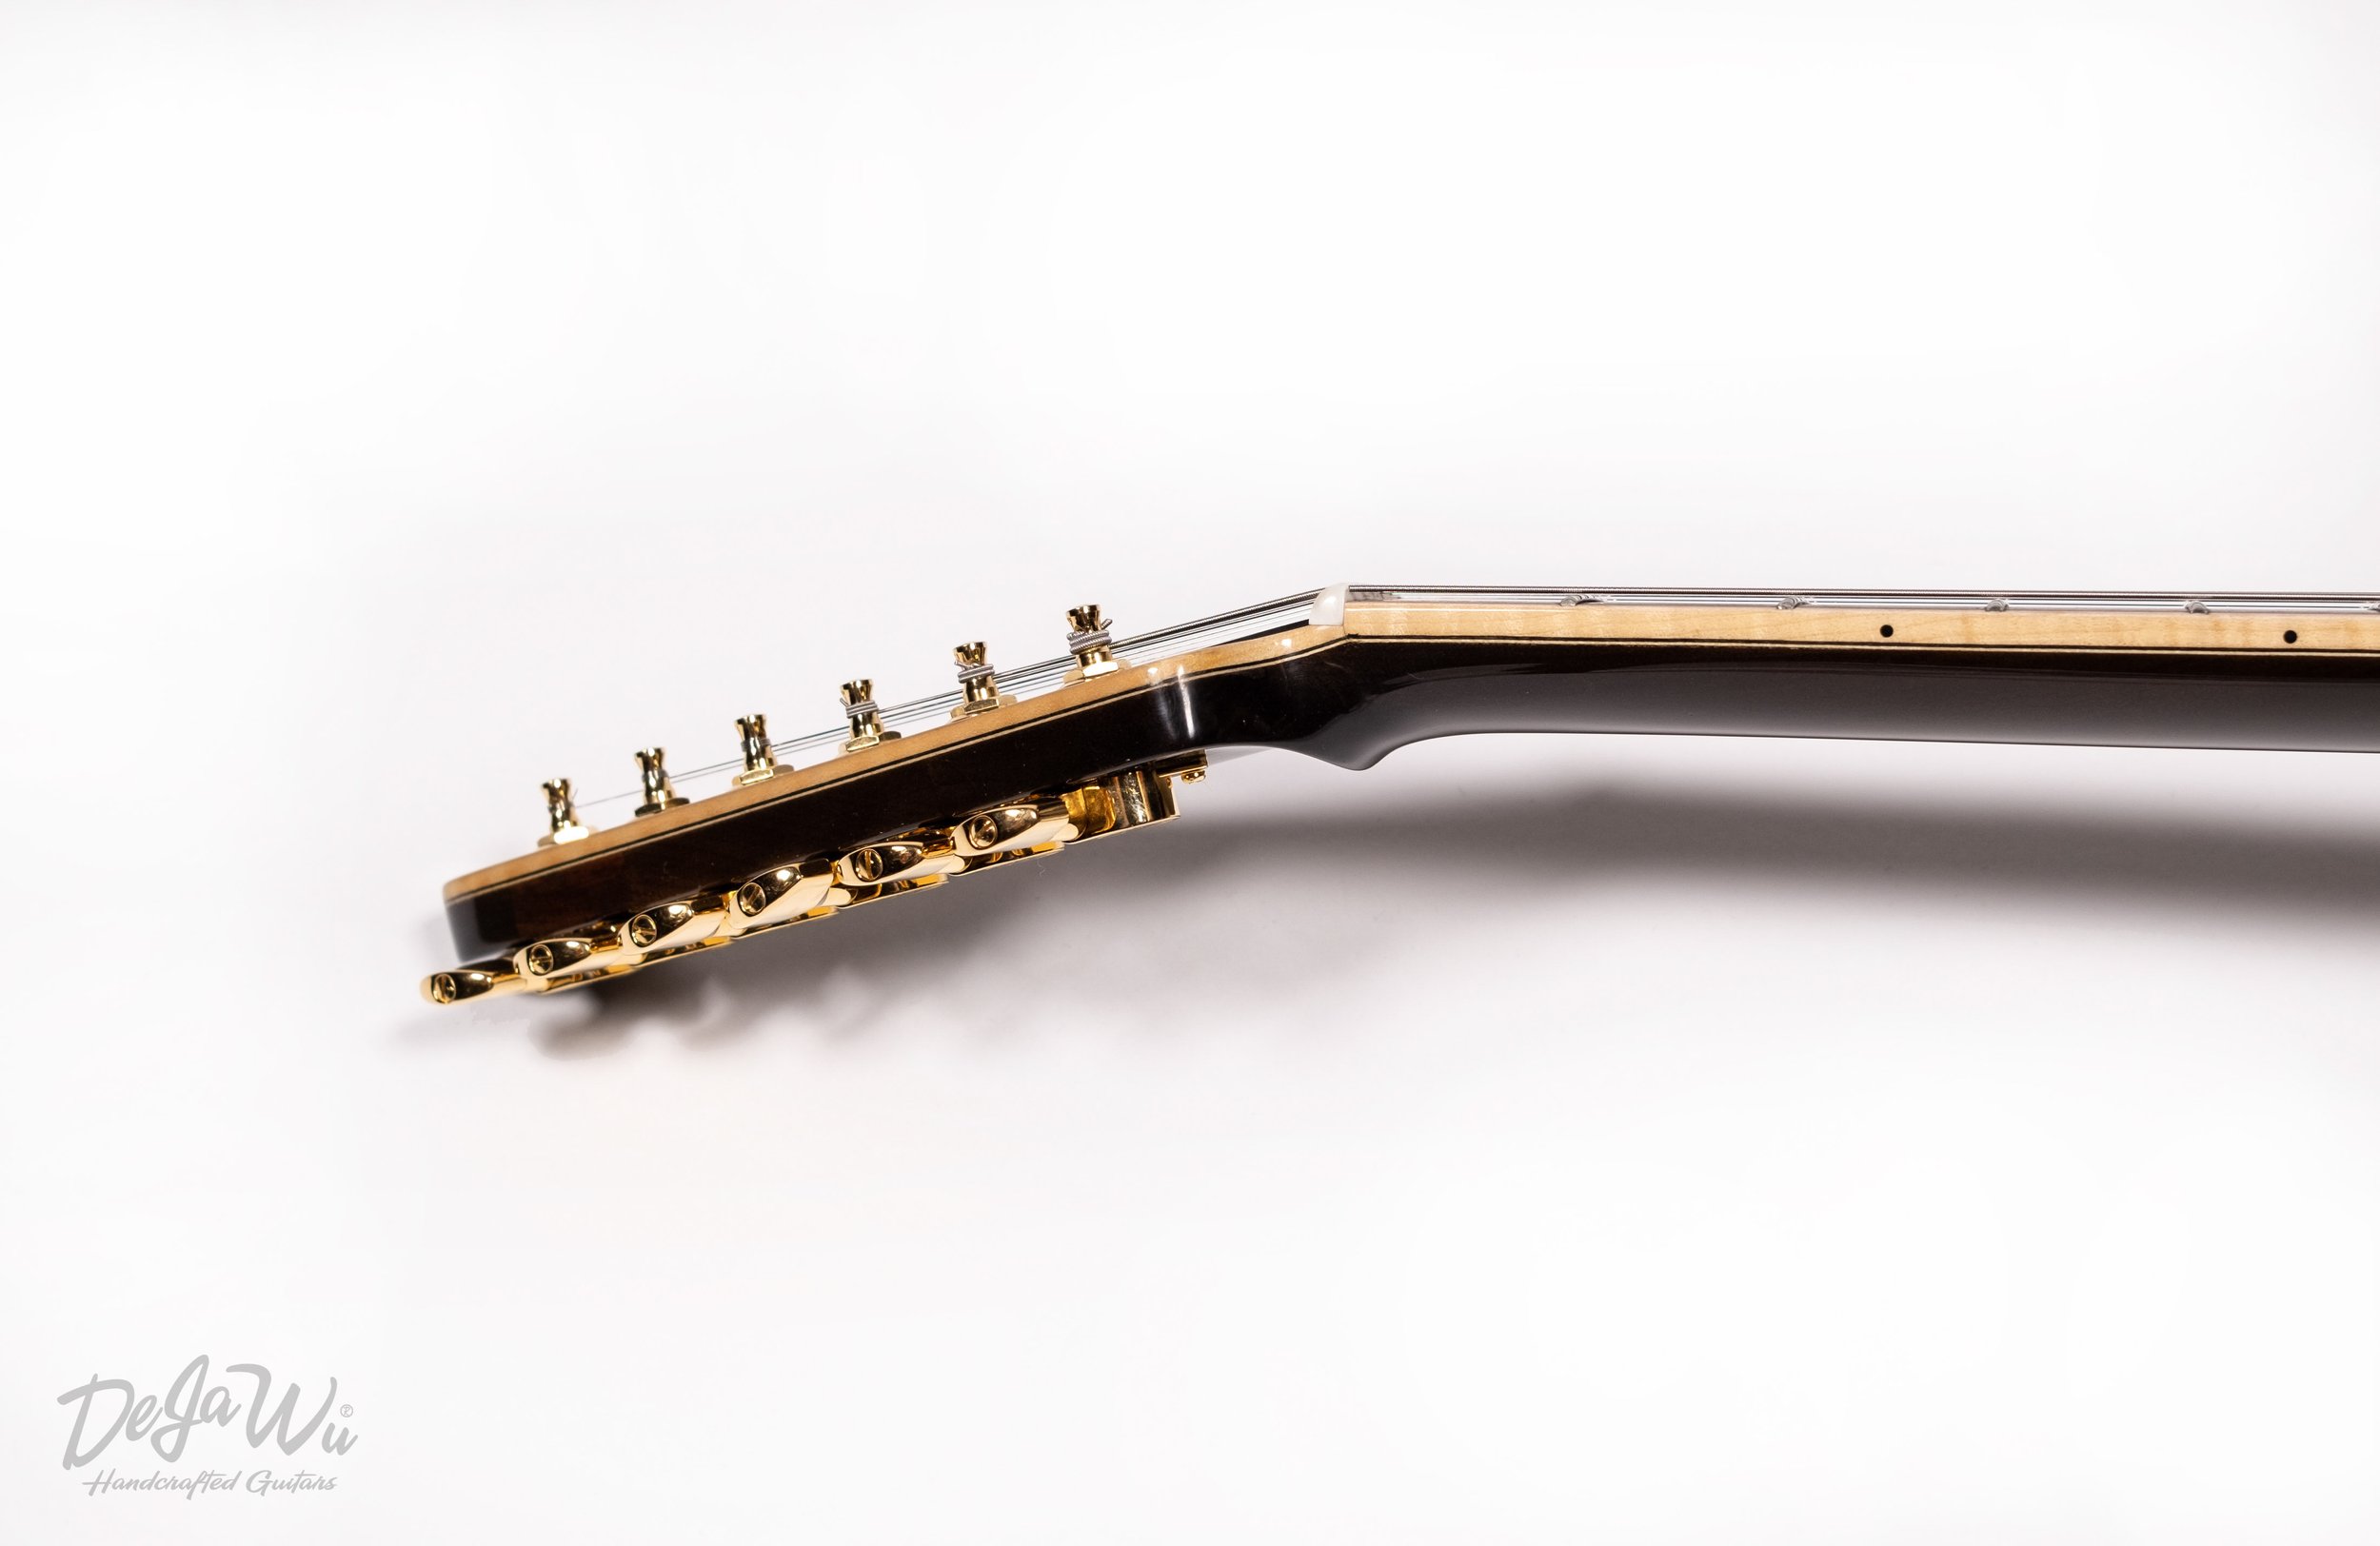 Dejawu Guitars - Hand carved semi hollow guitar from 7500-year-old sinker wood.